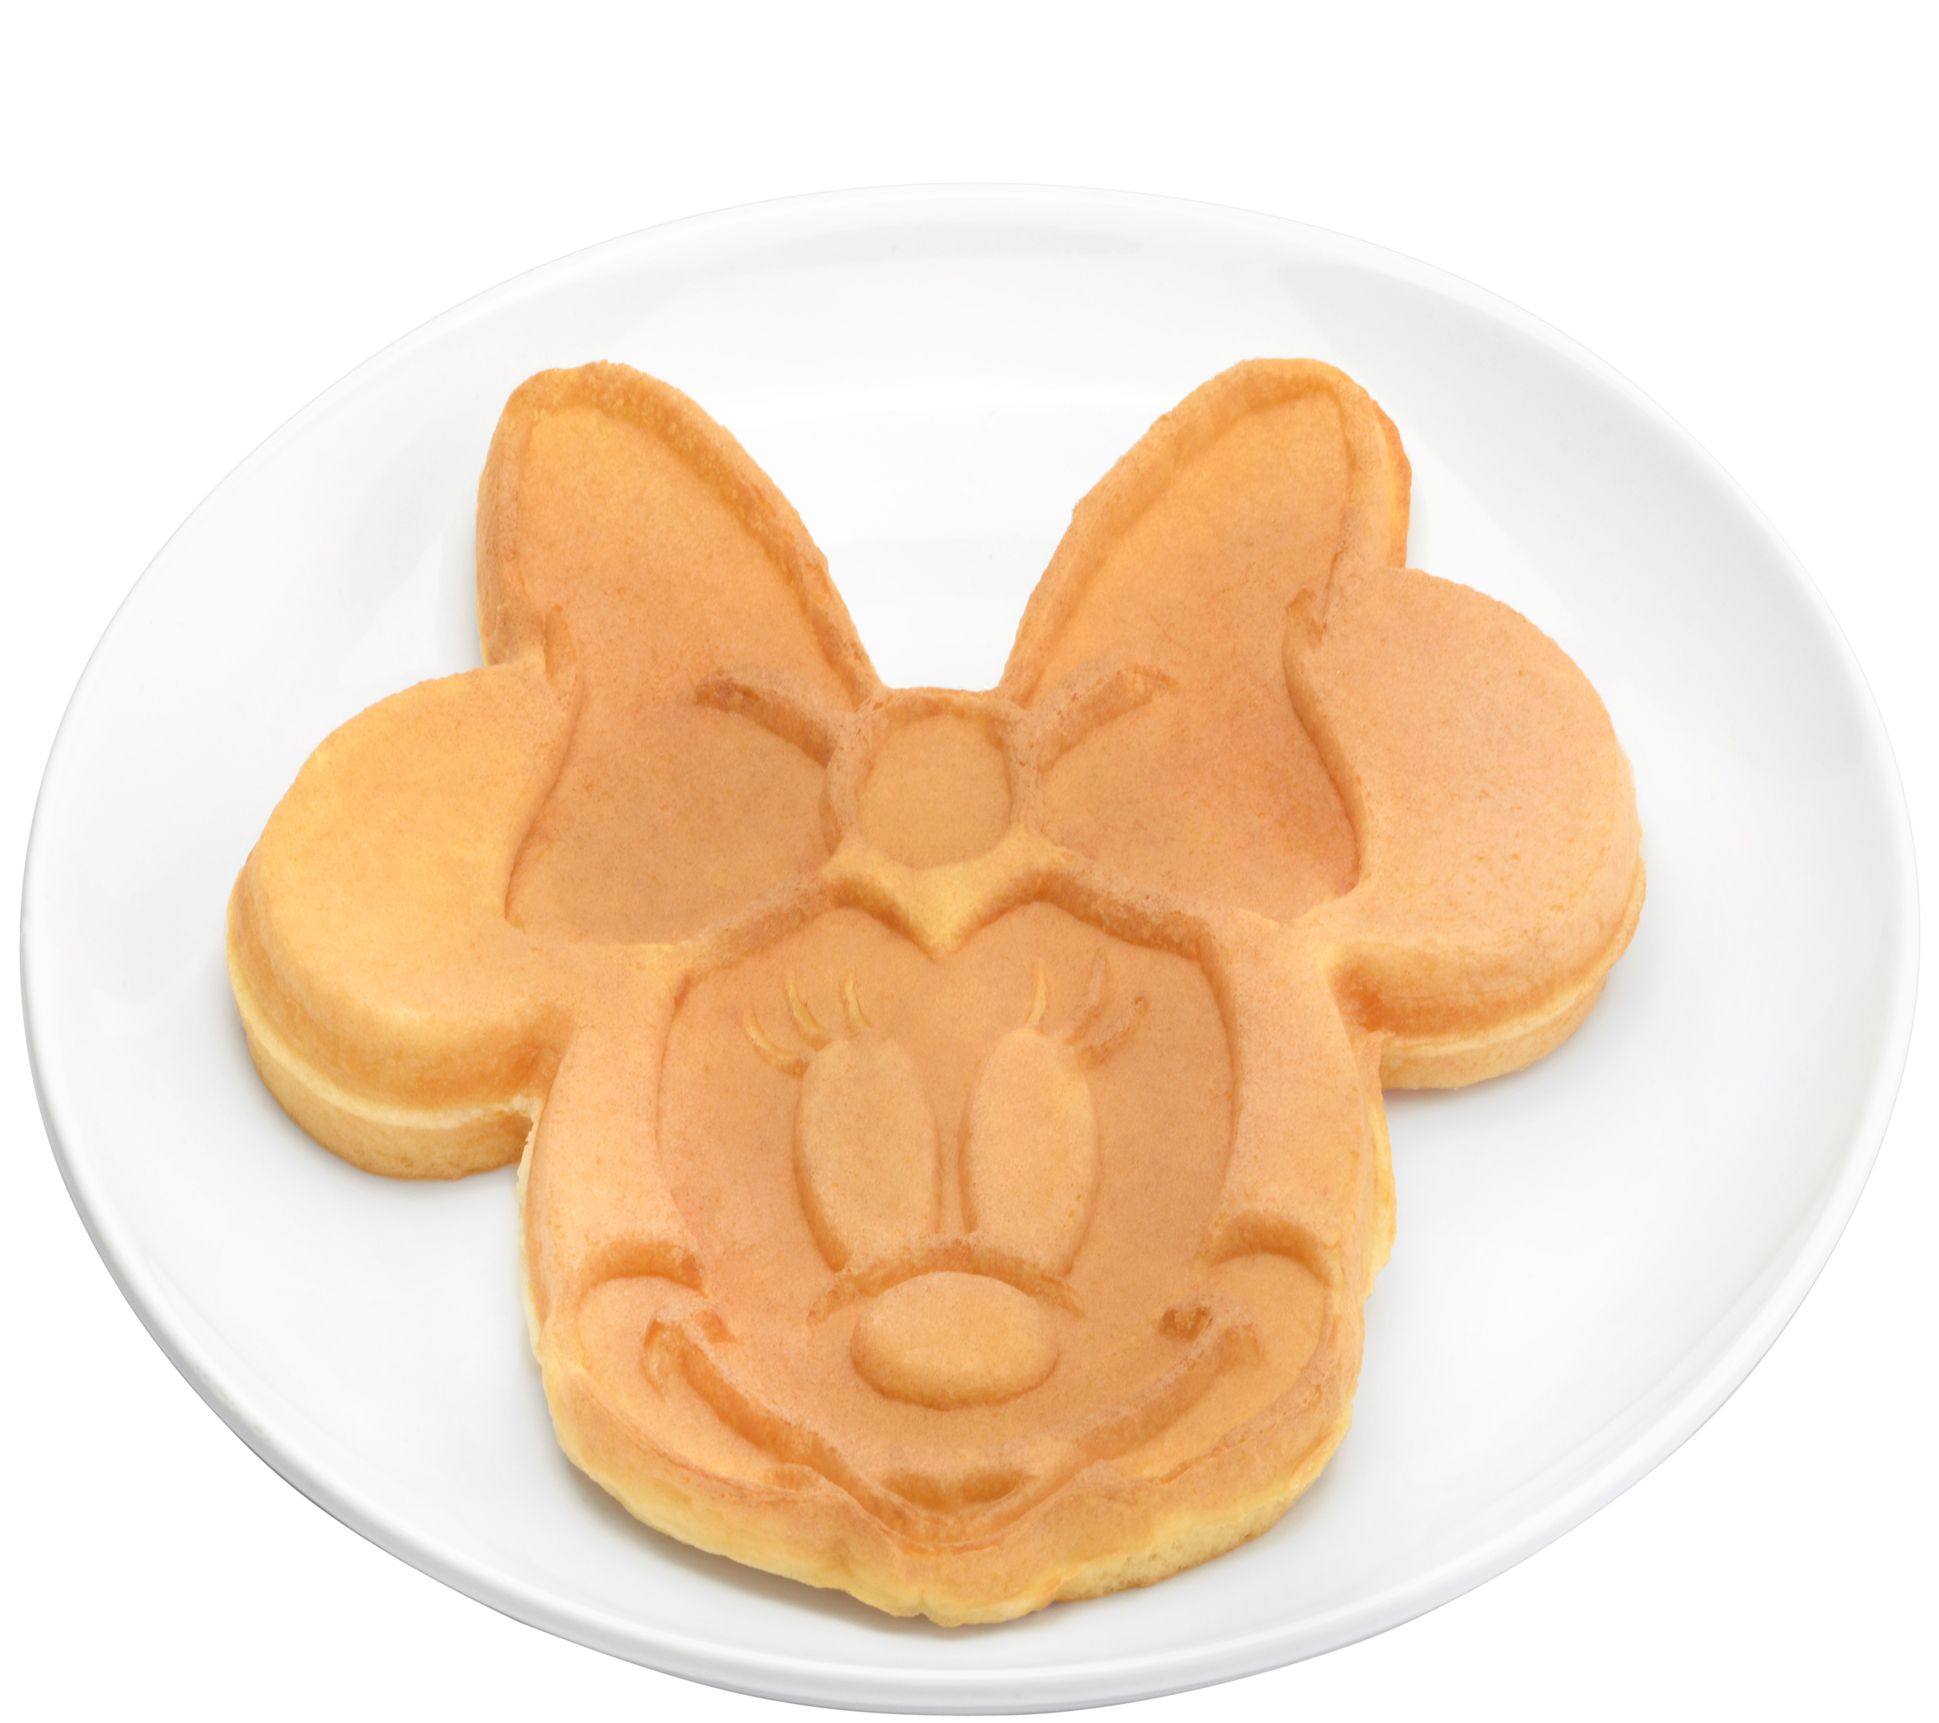 Disney Mickey Mouse 4 Mini Waffle Maker